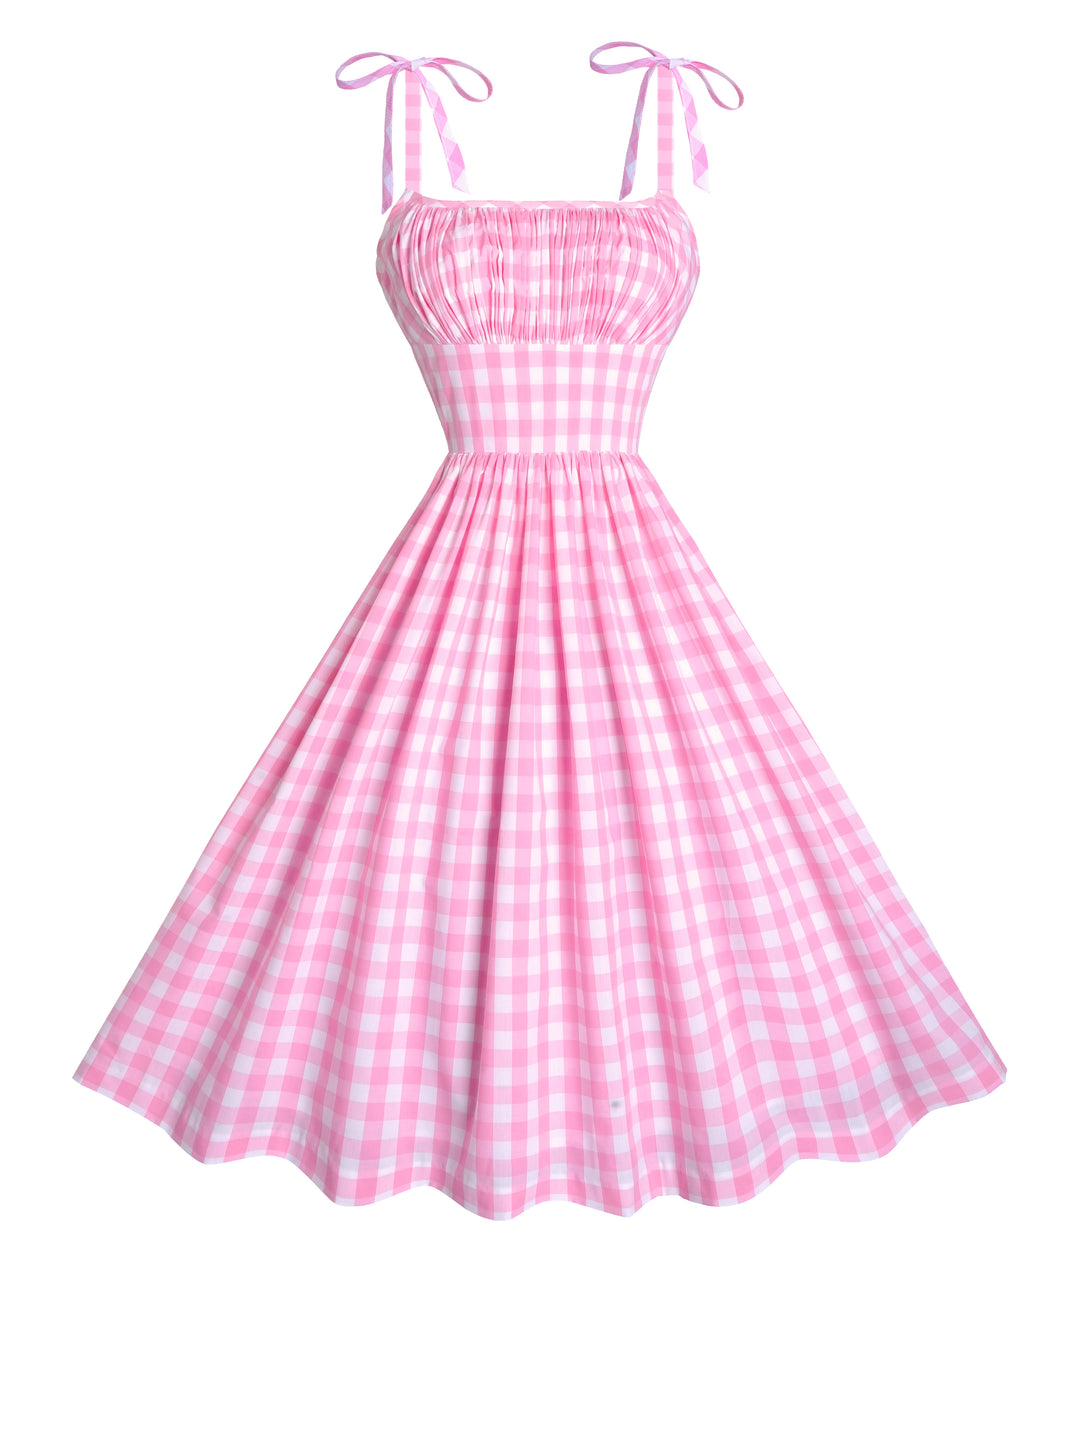 MTO - Kelly Dress Light Pink Gingham - Large Checks